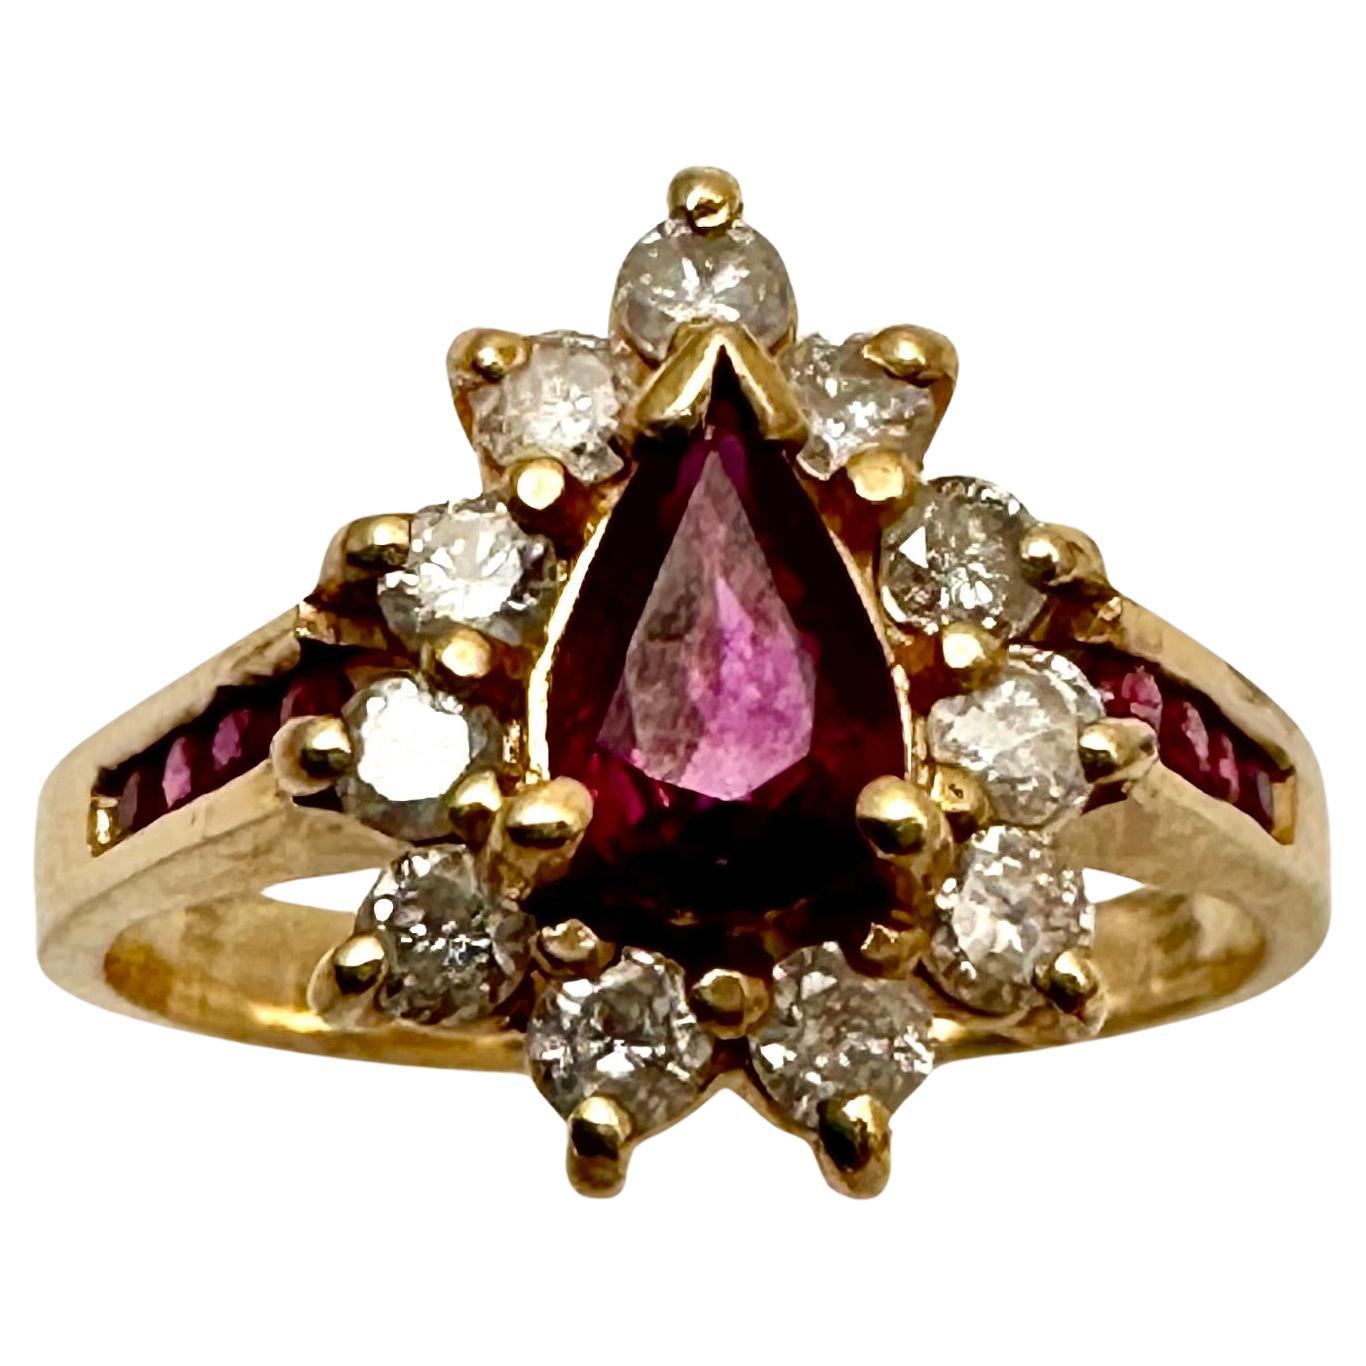 14k Yellow Gold 5mm x 7mm Pear Shape Ruby w/Surrounding Diamonds Ring Sz 6 1/2 For Sale